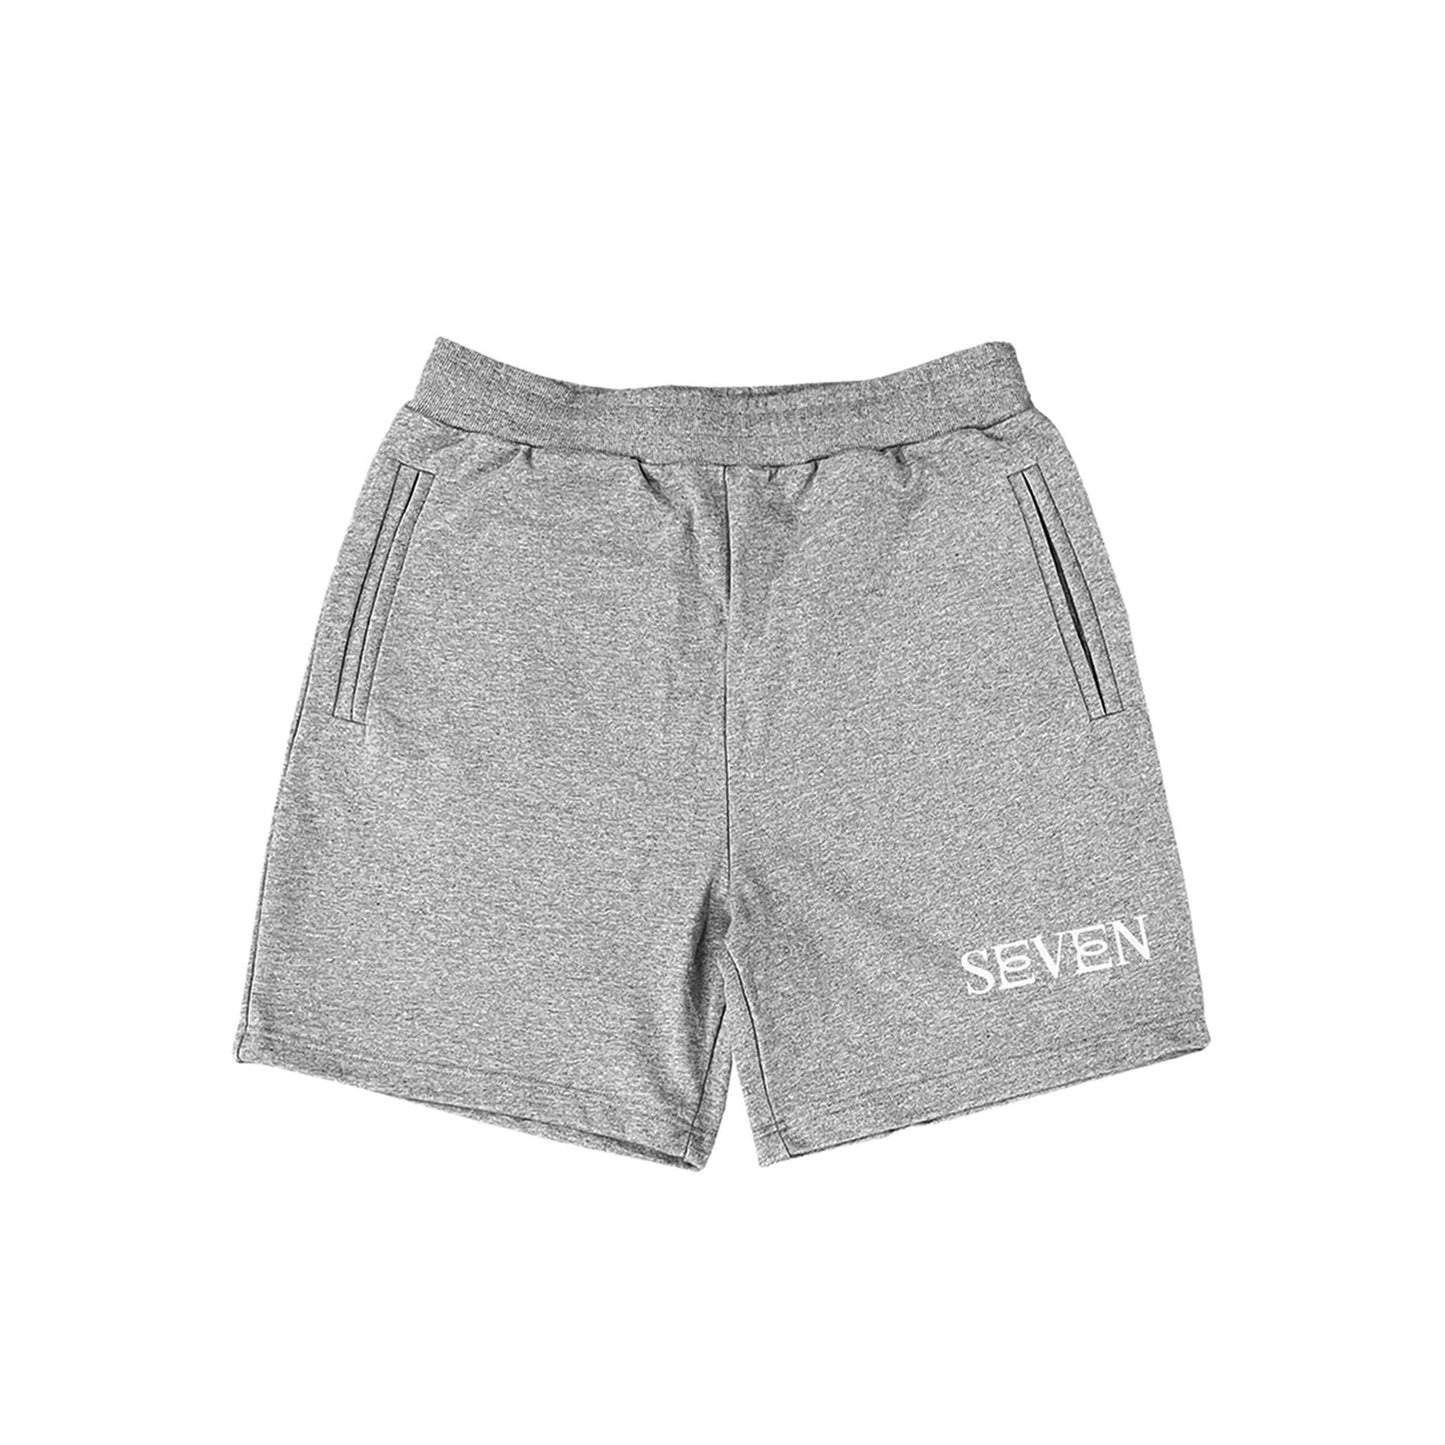 'SEVEN' Sweat Shorts